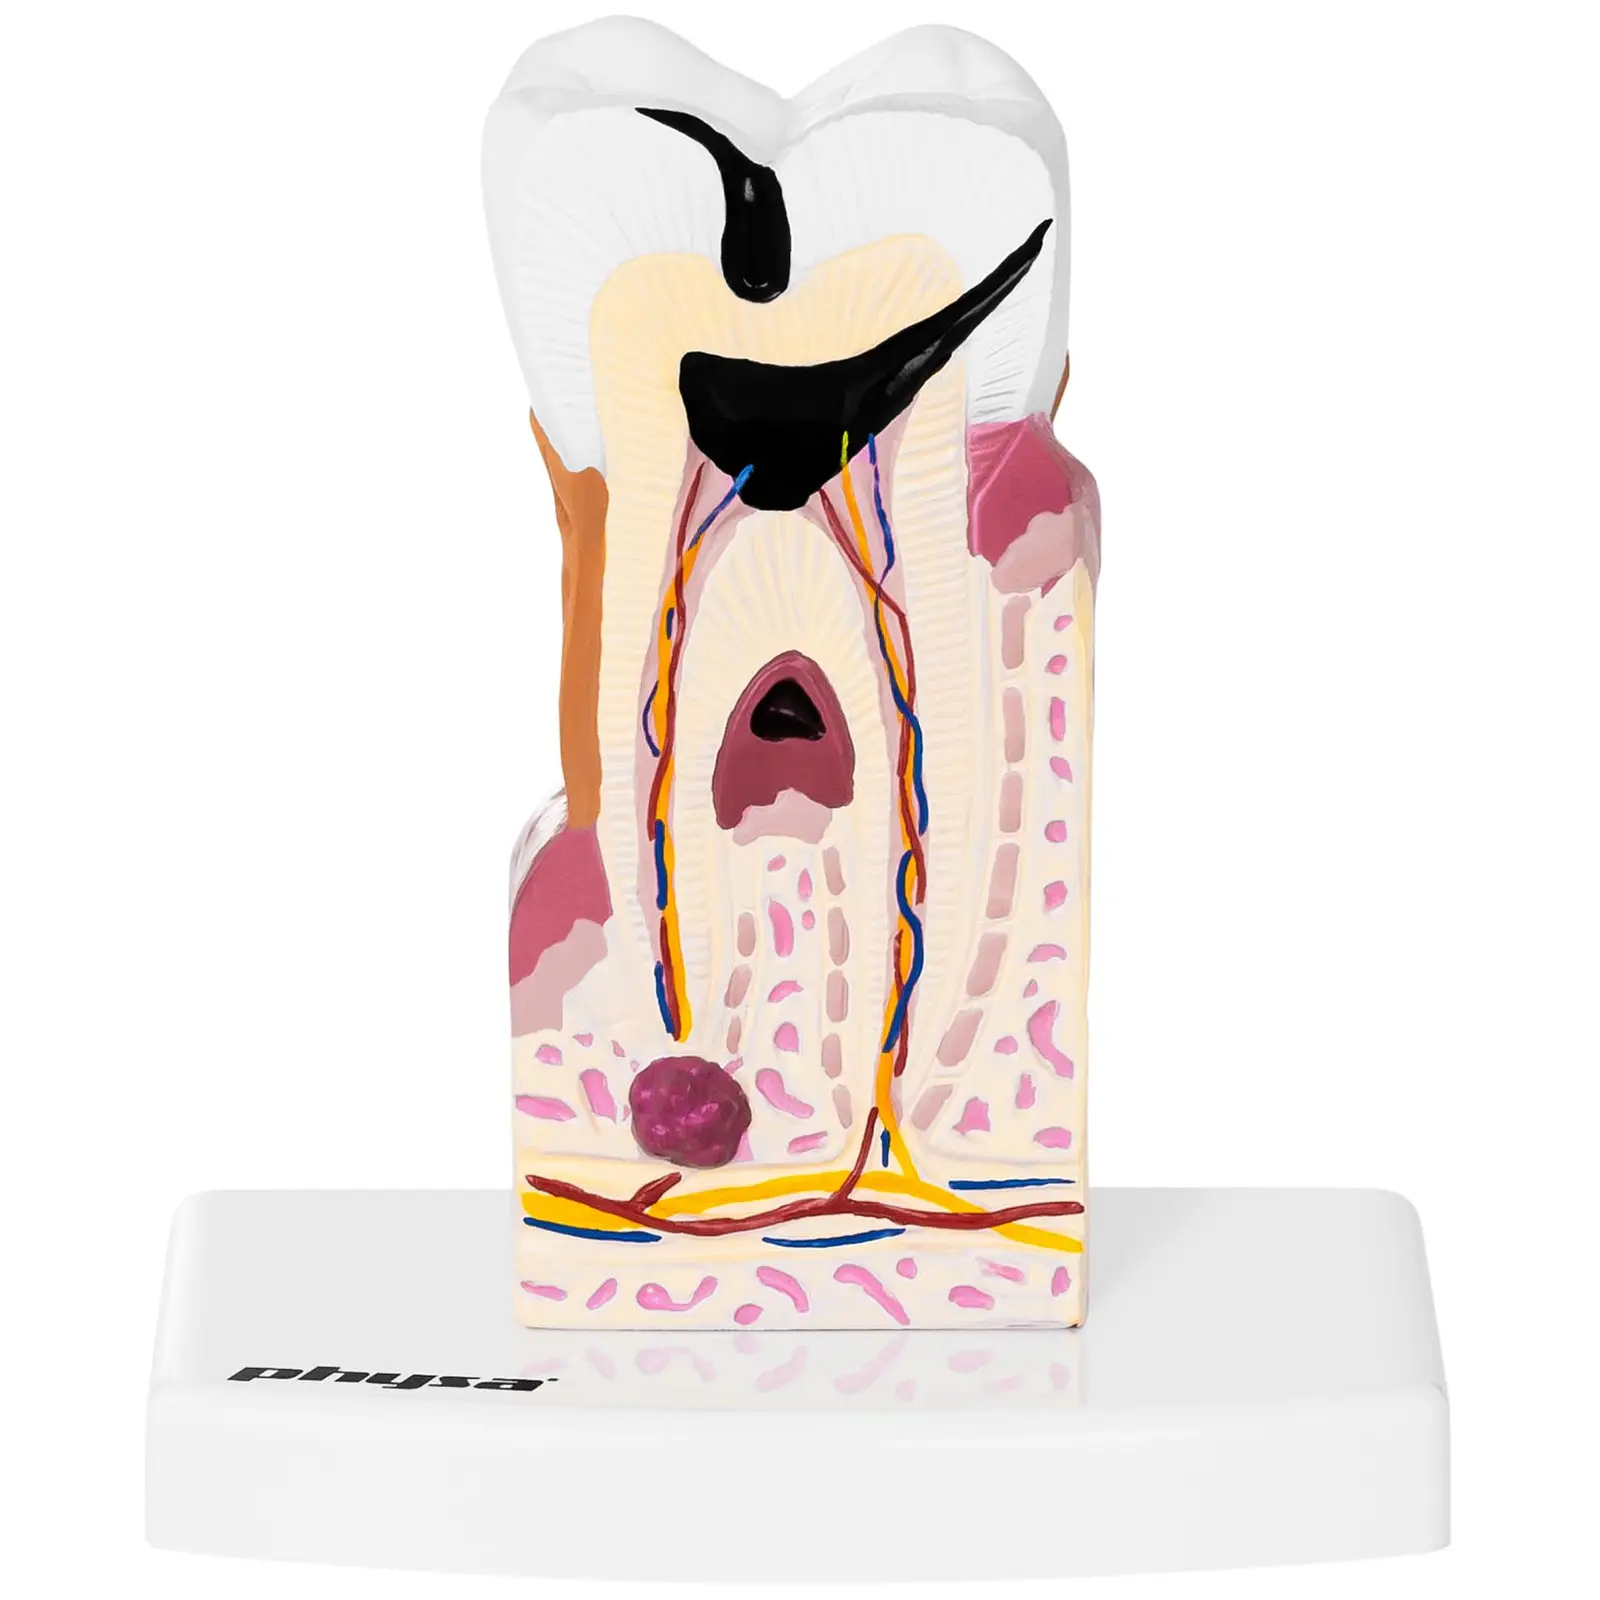 Model nemocného zubu